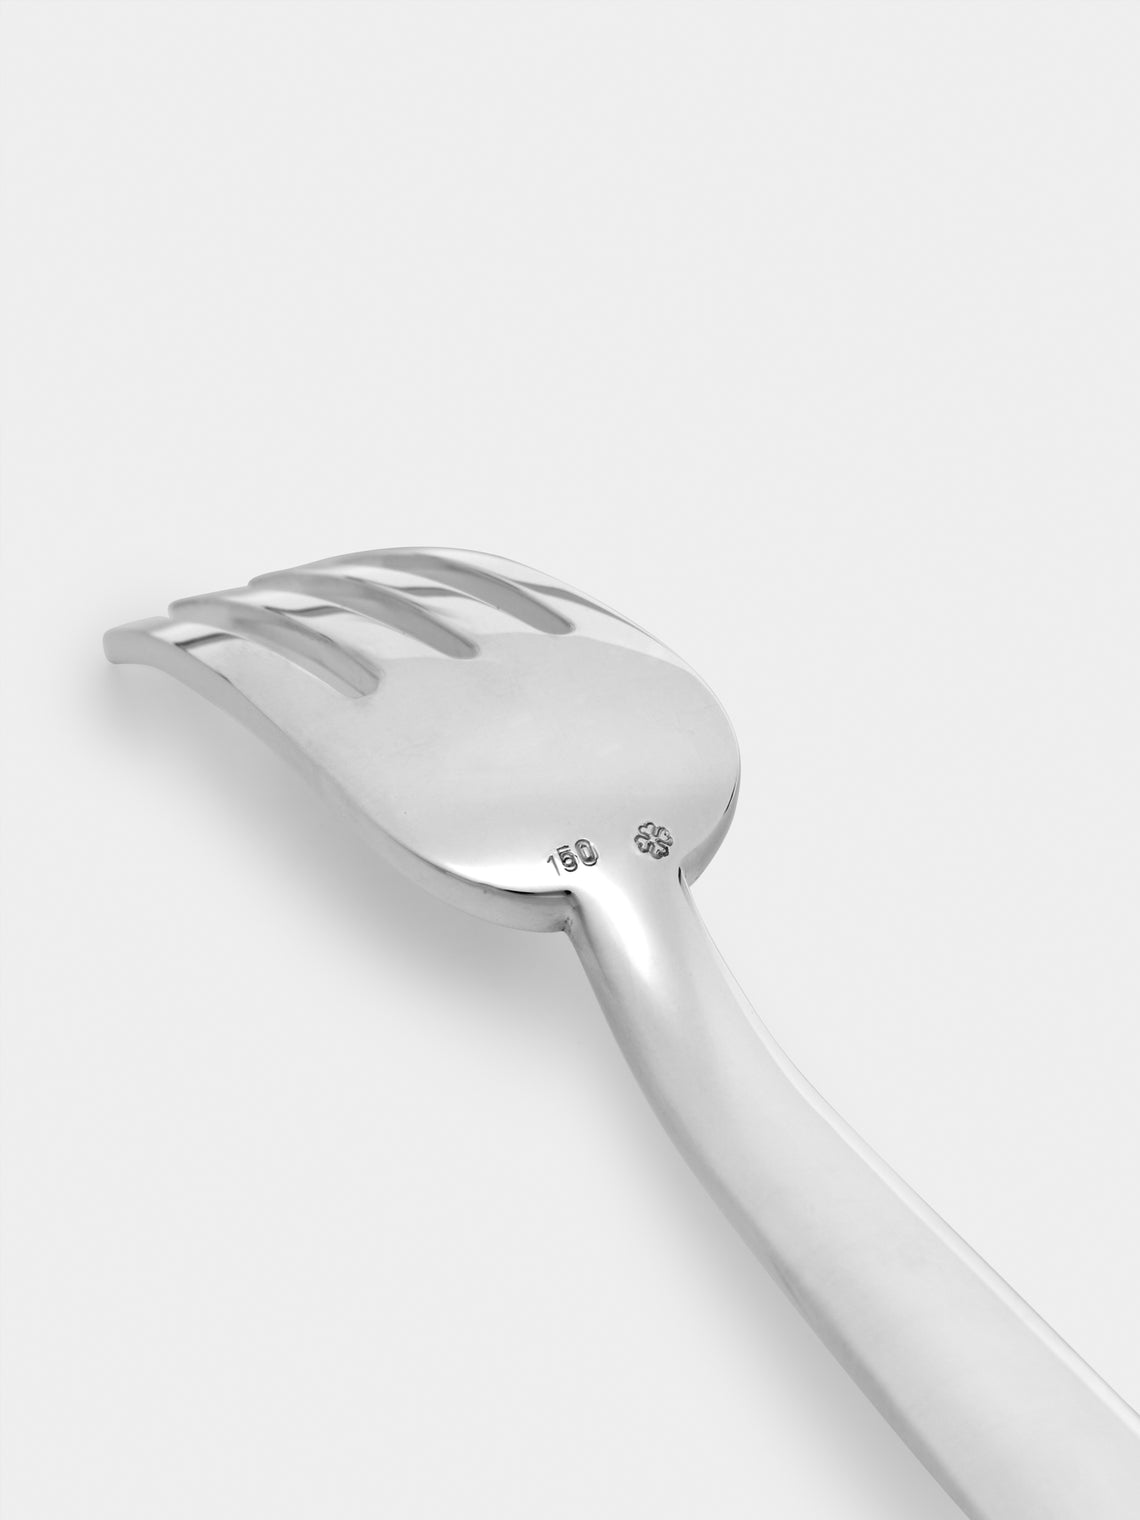 Wiener Silber Manufactur - Josef Hoffmann 135 Silver-Plated Dessert Fork -  - ABASK